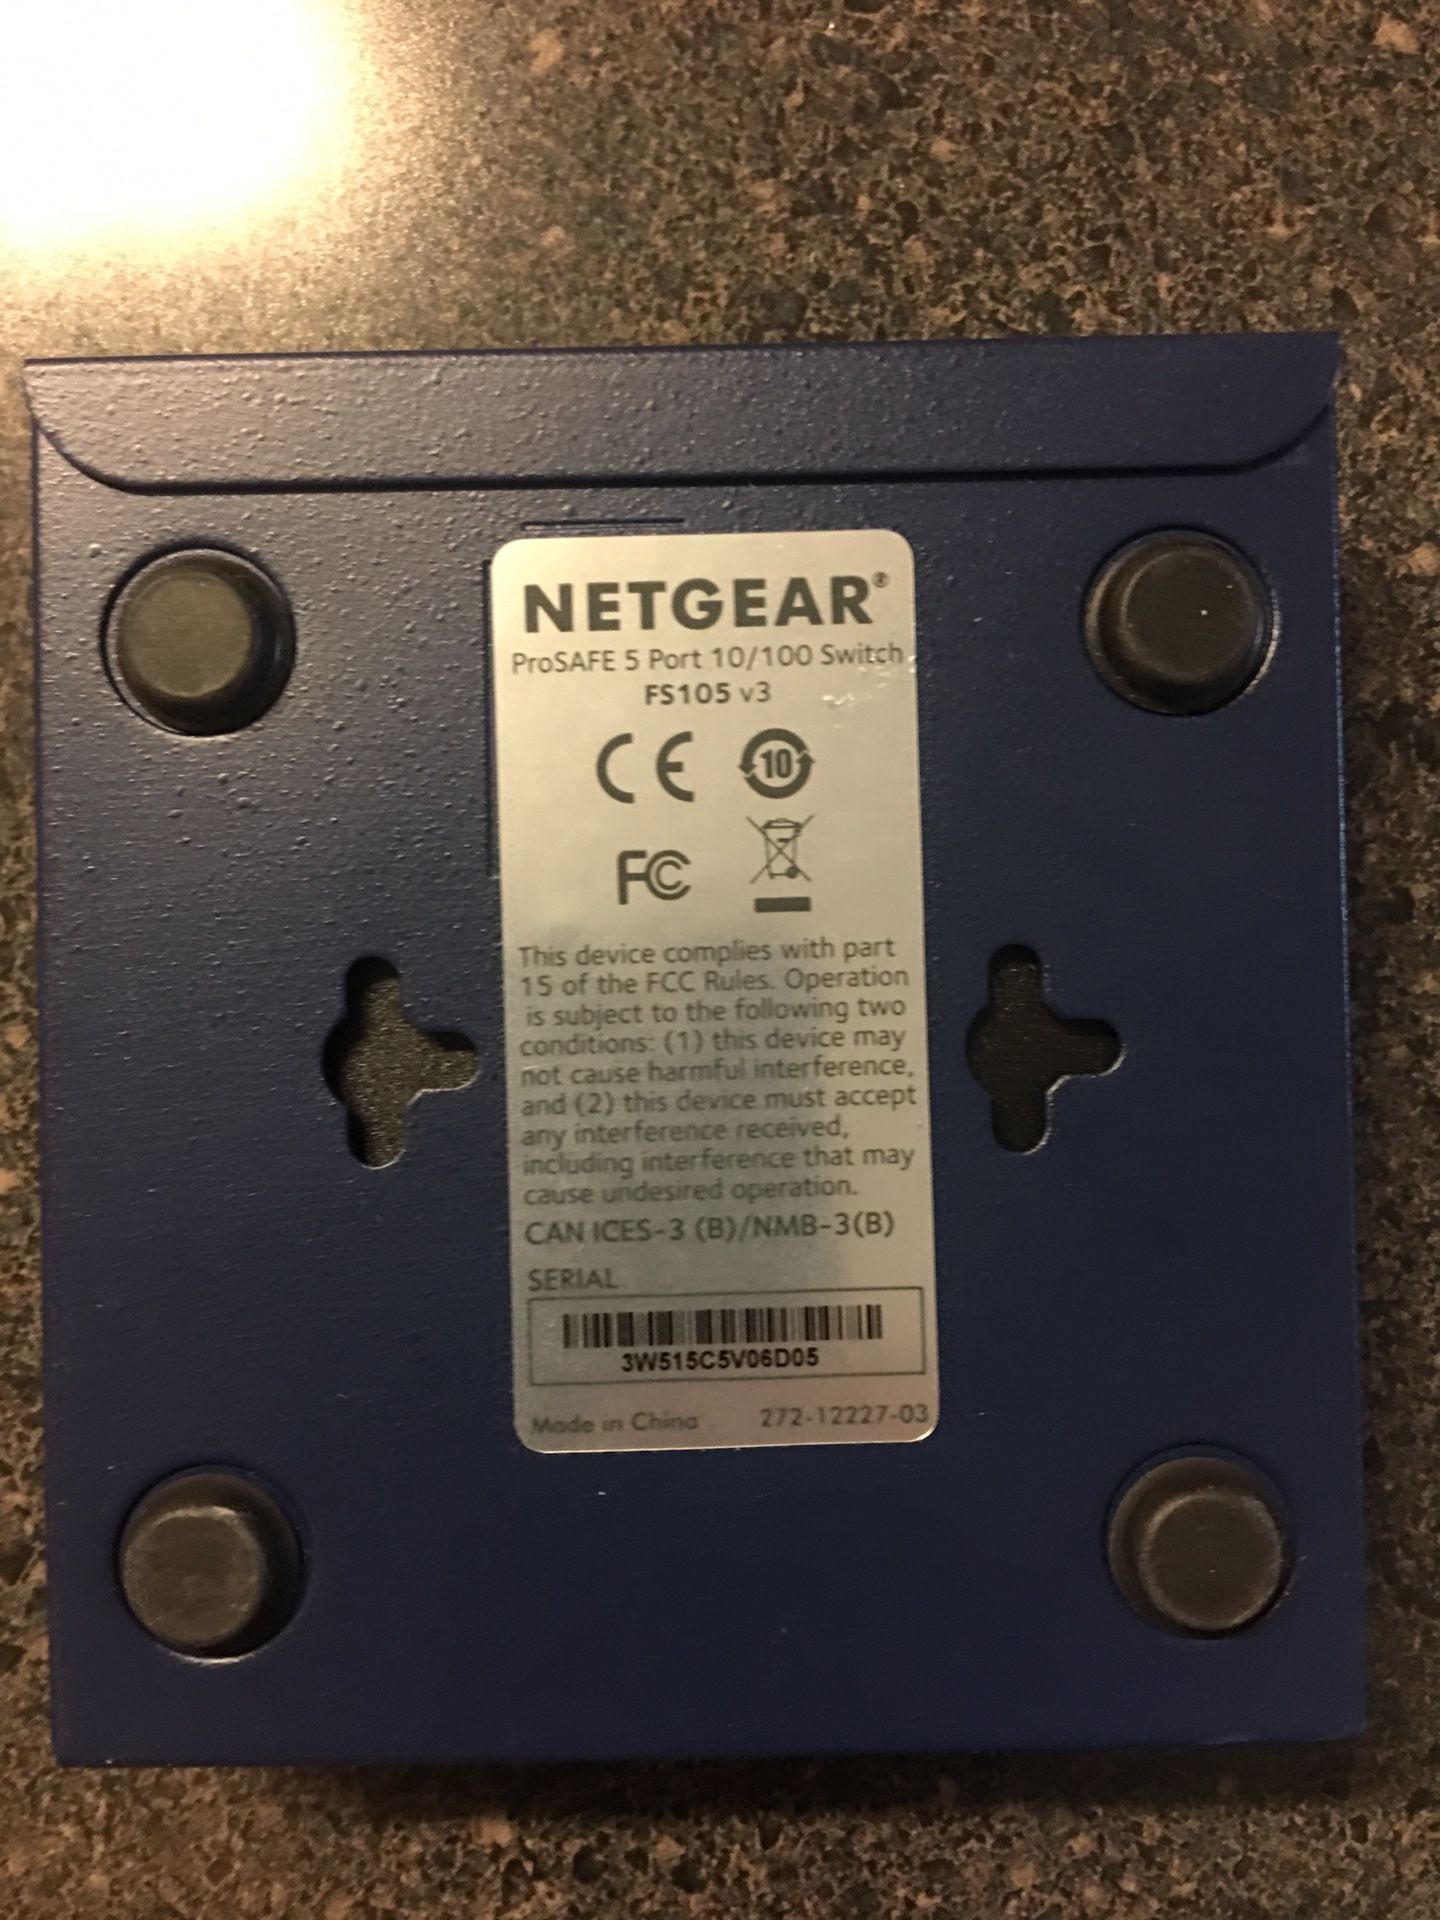 5 pcs of Netgear 5 port 10/100 switch FS105 Price: $5 each